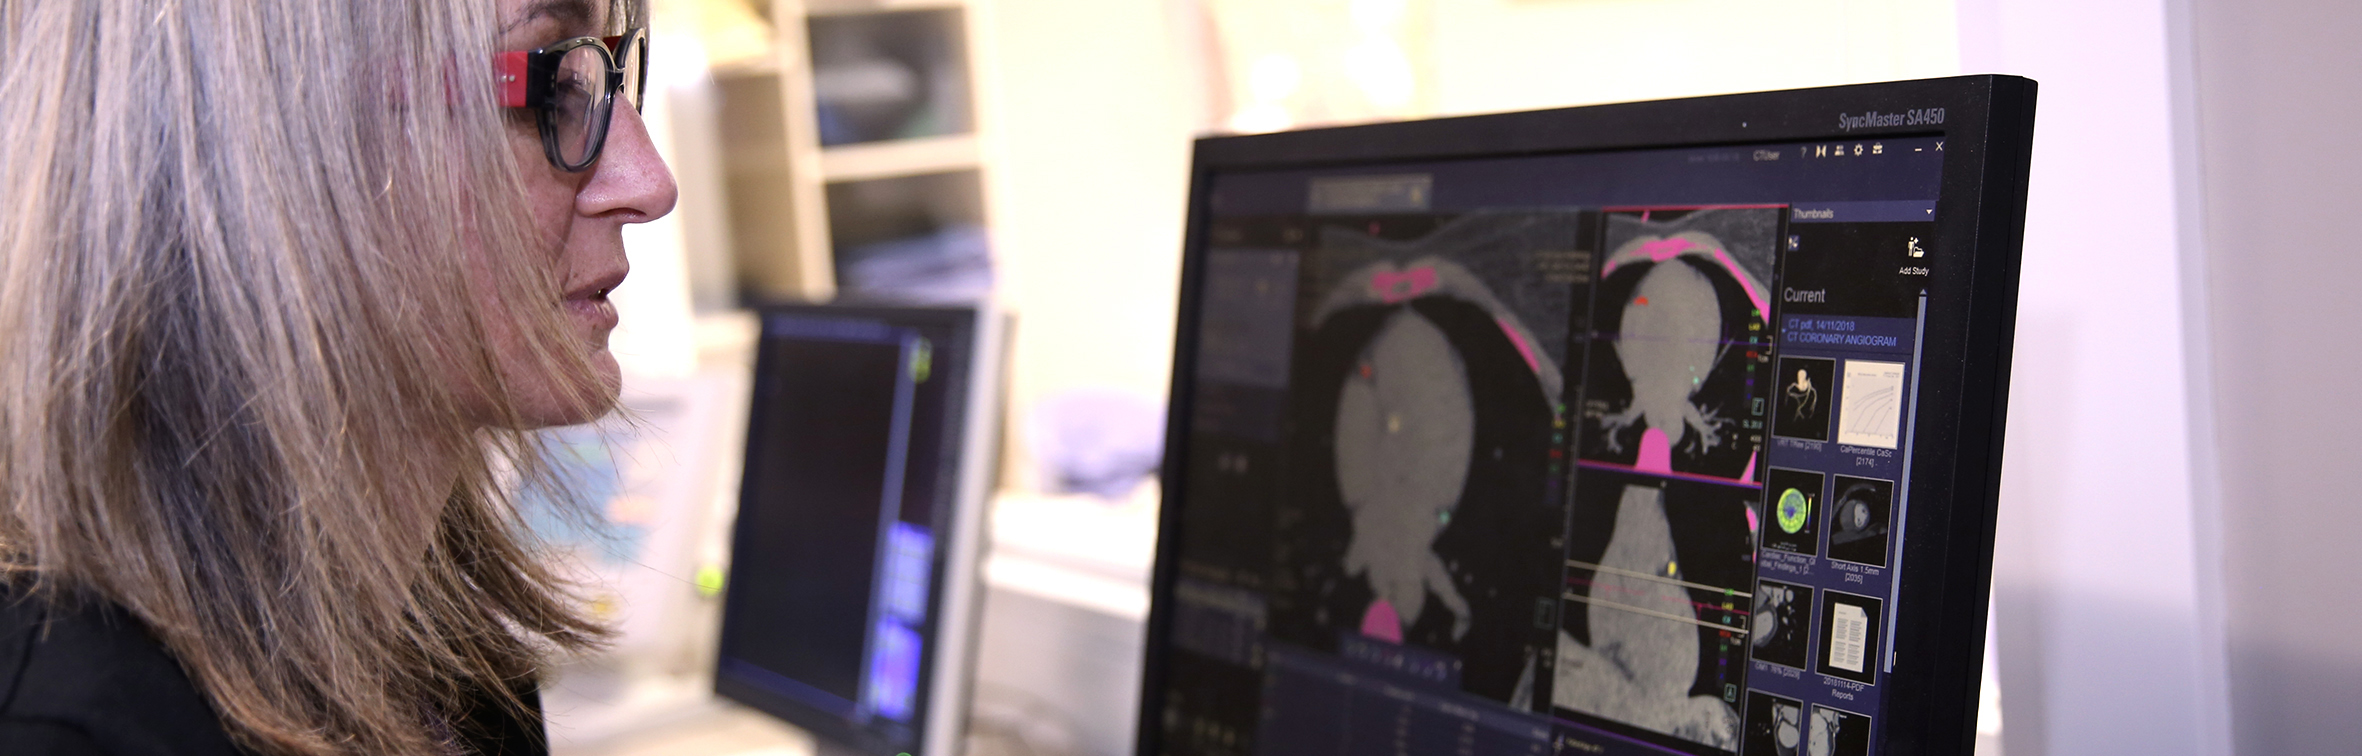 MRI - Magnetic Resonance Imaging - CT - Computed Tomography - Xray - Ultrasound - Digital X-rays